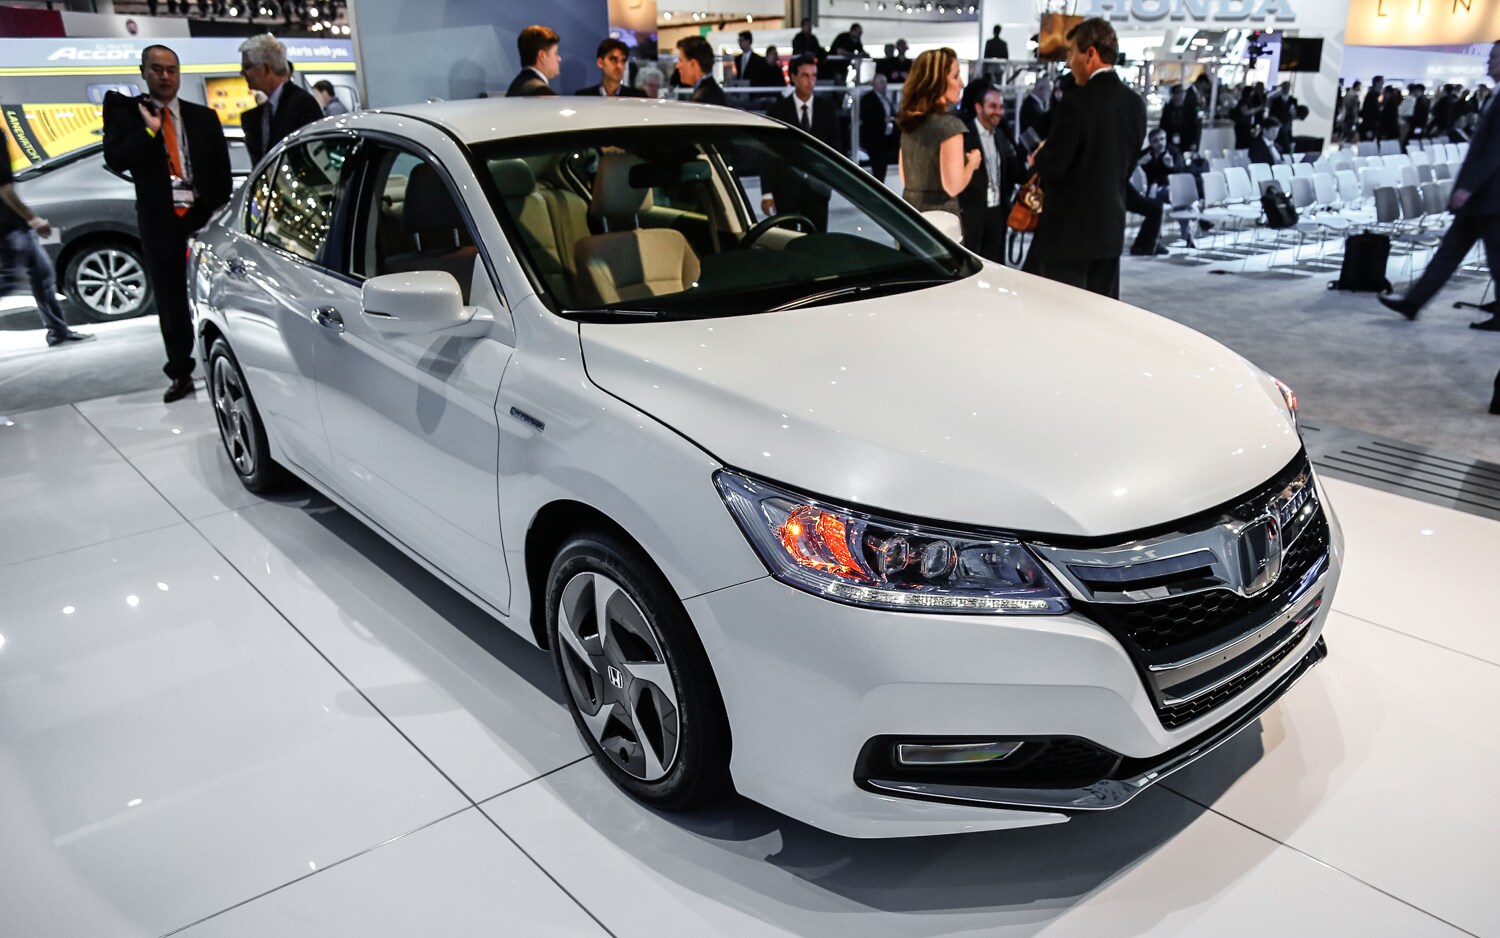 2014 Honda Accord Plug-In Hybrid Now on Sale in California, New York